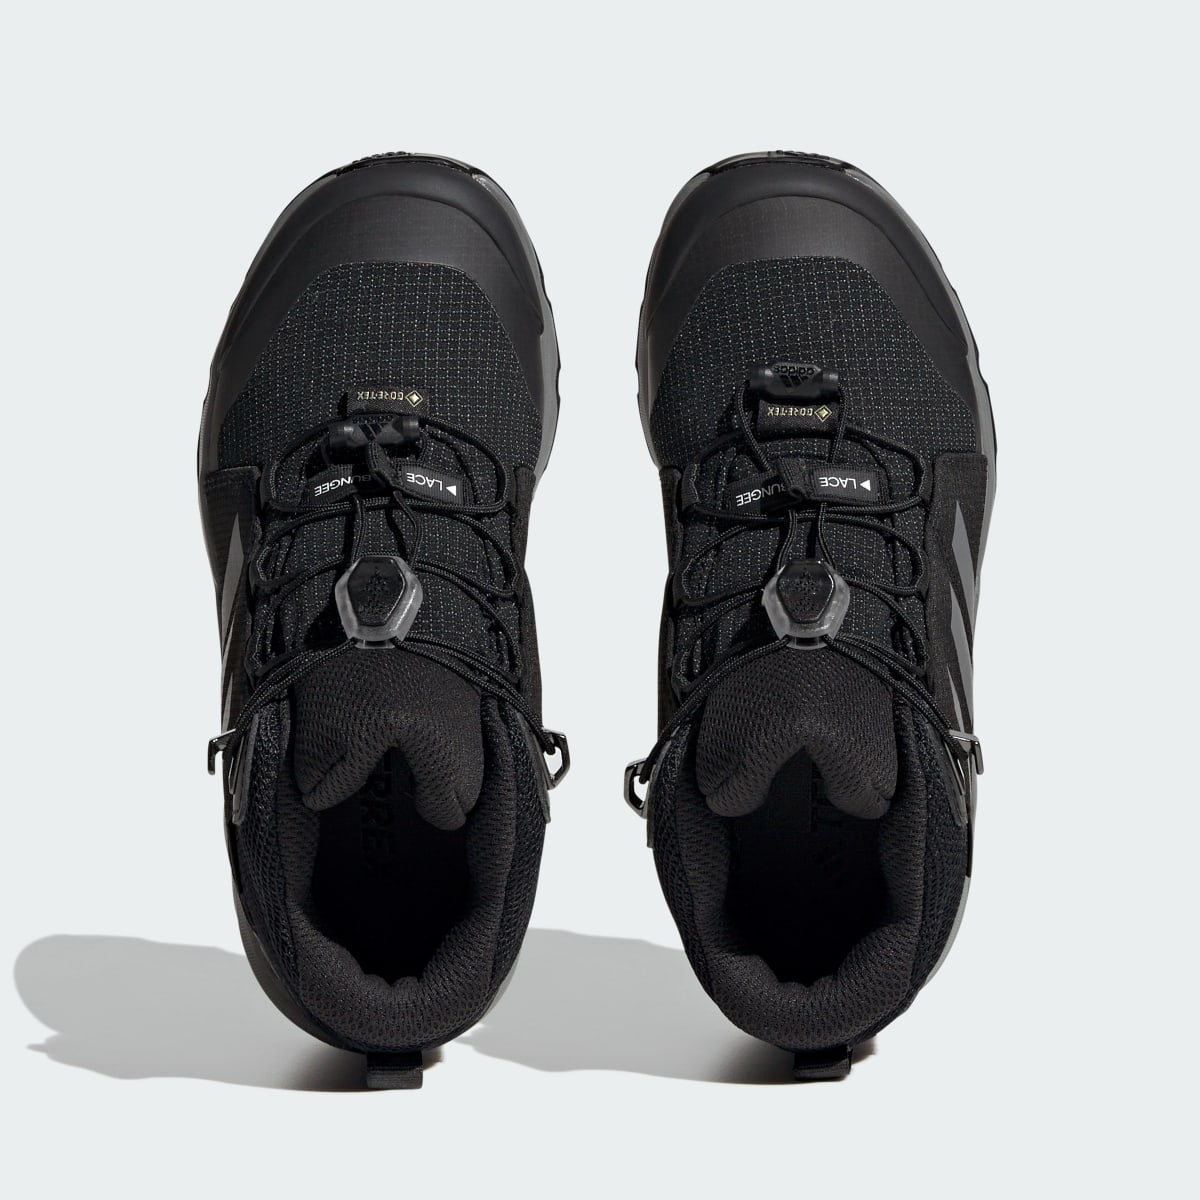 Adidas Chaussure de randonnée Organizer Mid GORE-TEX. 4